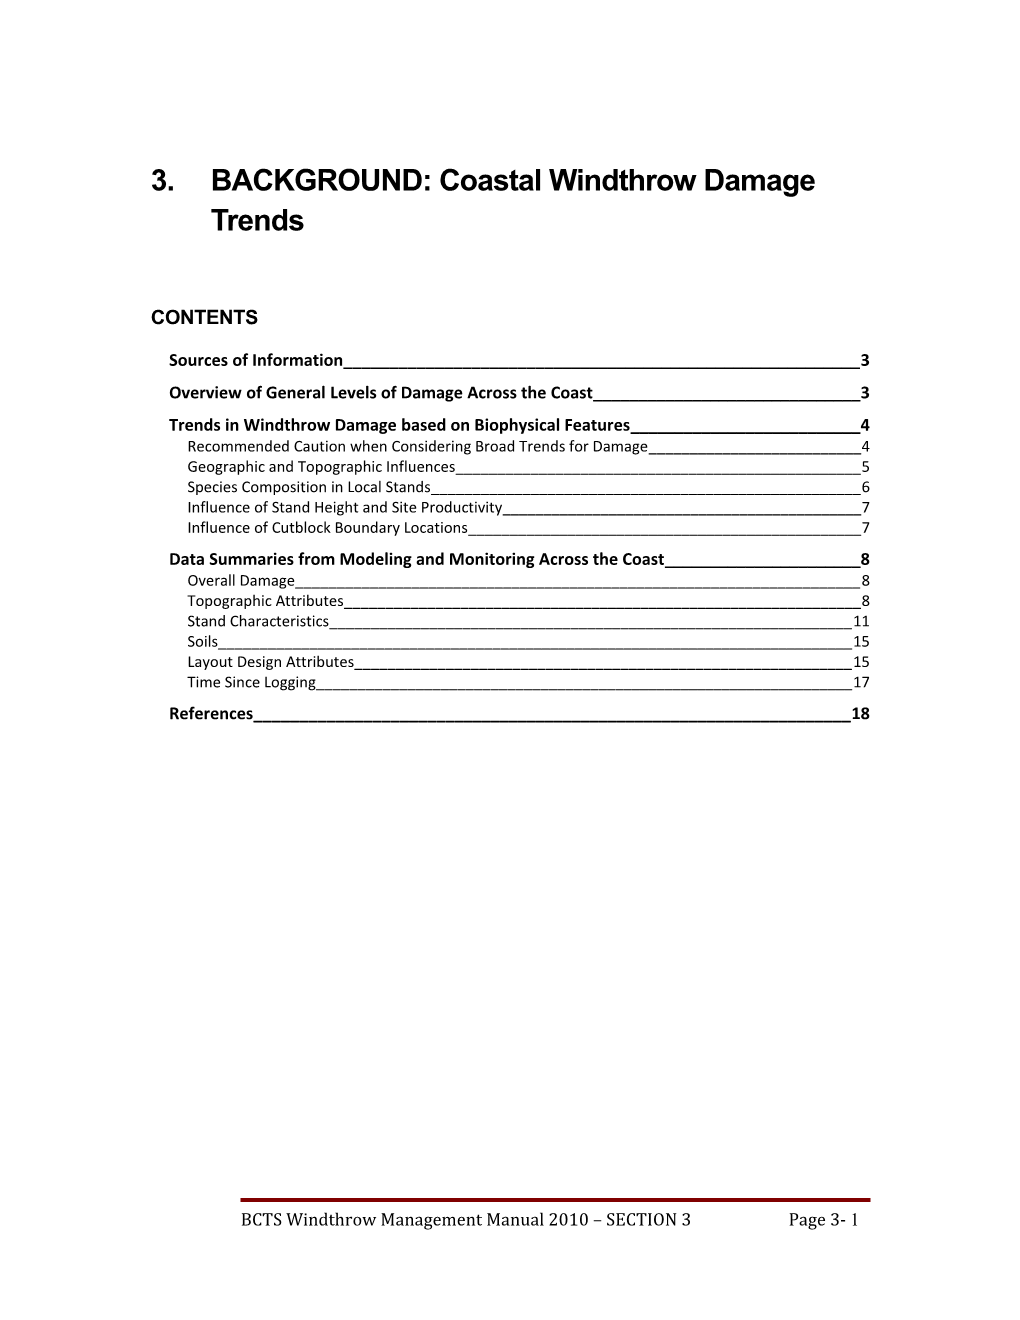 3.BACKGROUND: Coastal Windthrow Damage Trends